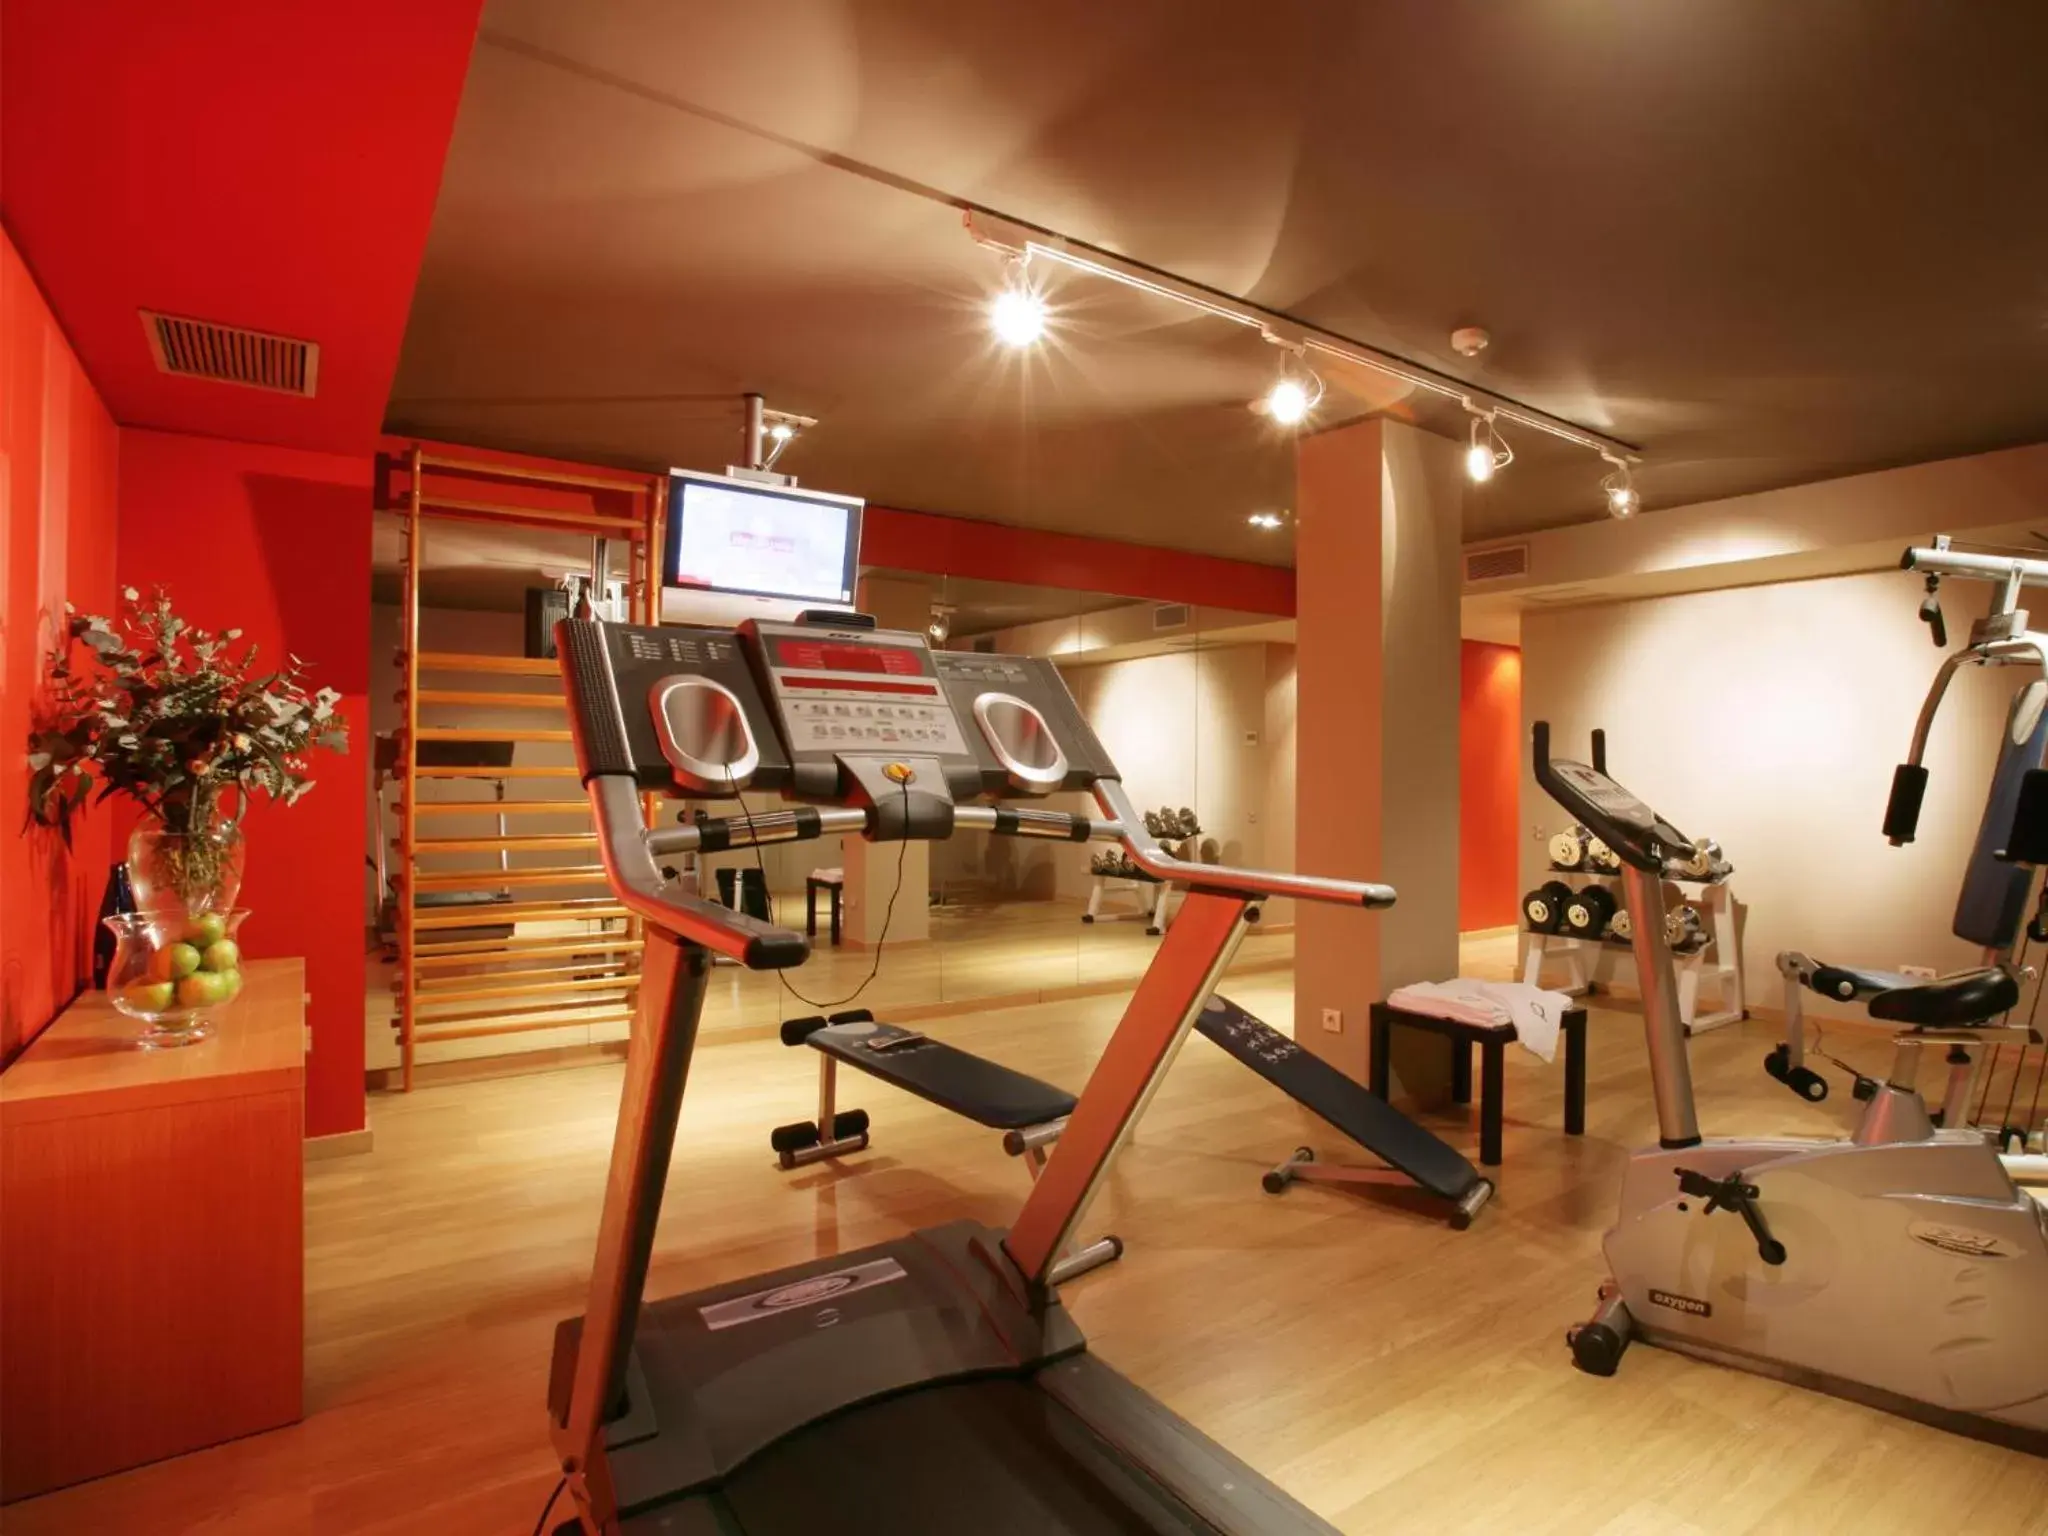 Fitness centre/facilities, Fitness Center/Facilities in Qgat Restaurant Events & Hotel